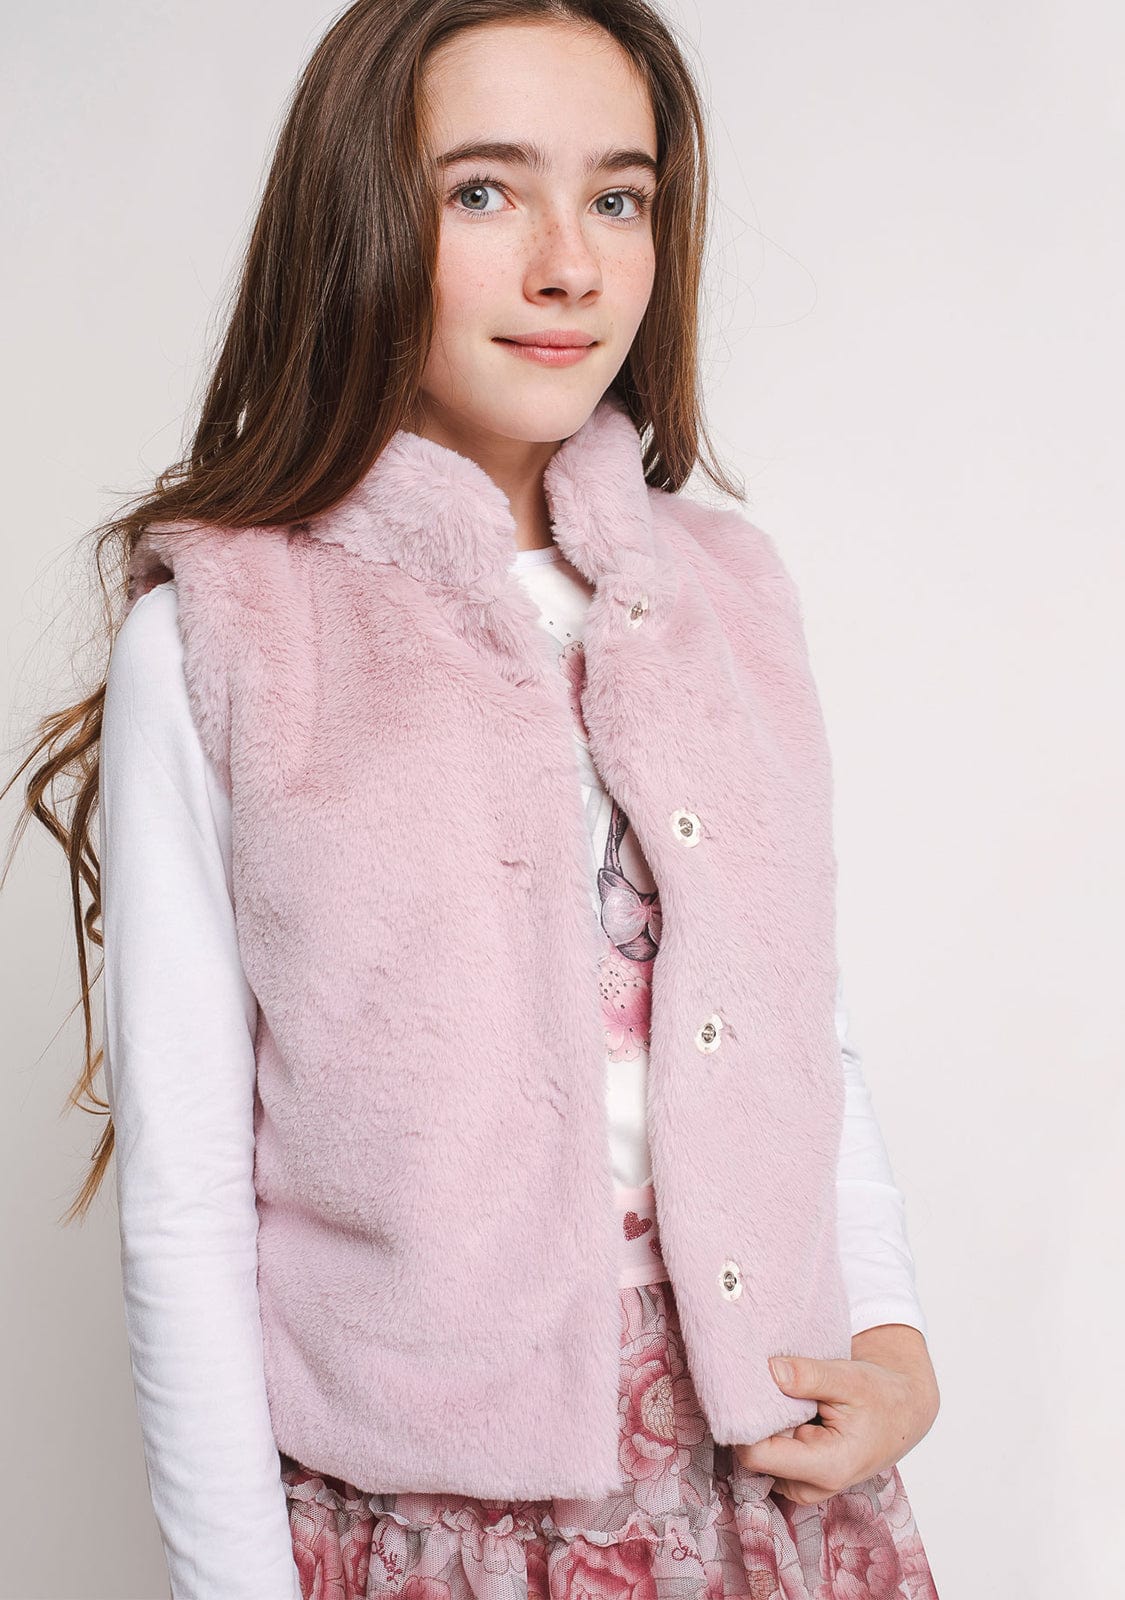 CONGUITOS TEXTIL Clothing Girl's Pink Fur Vest